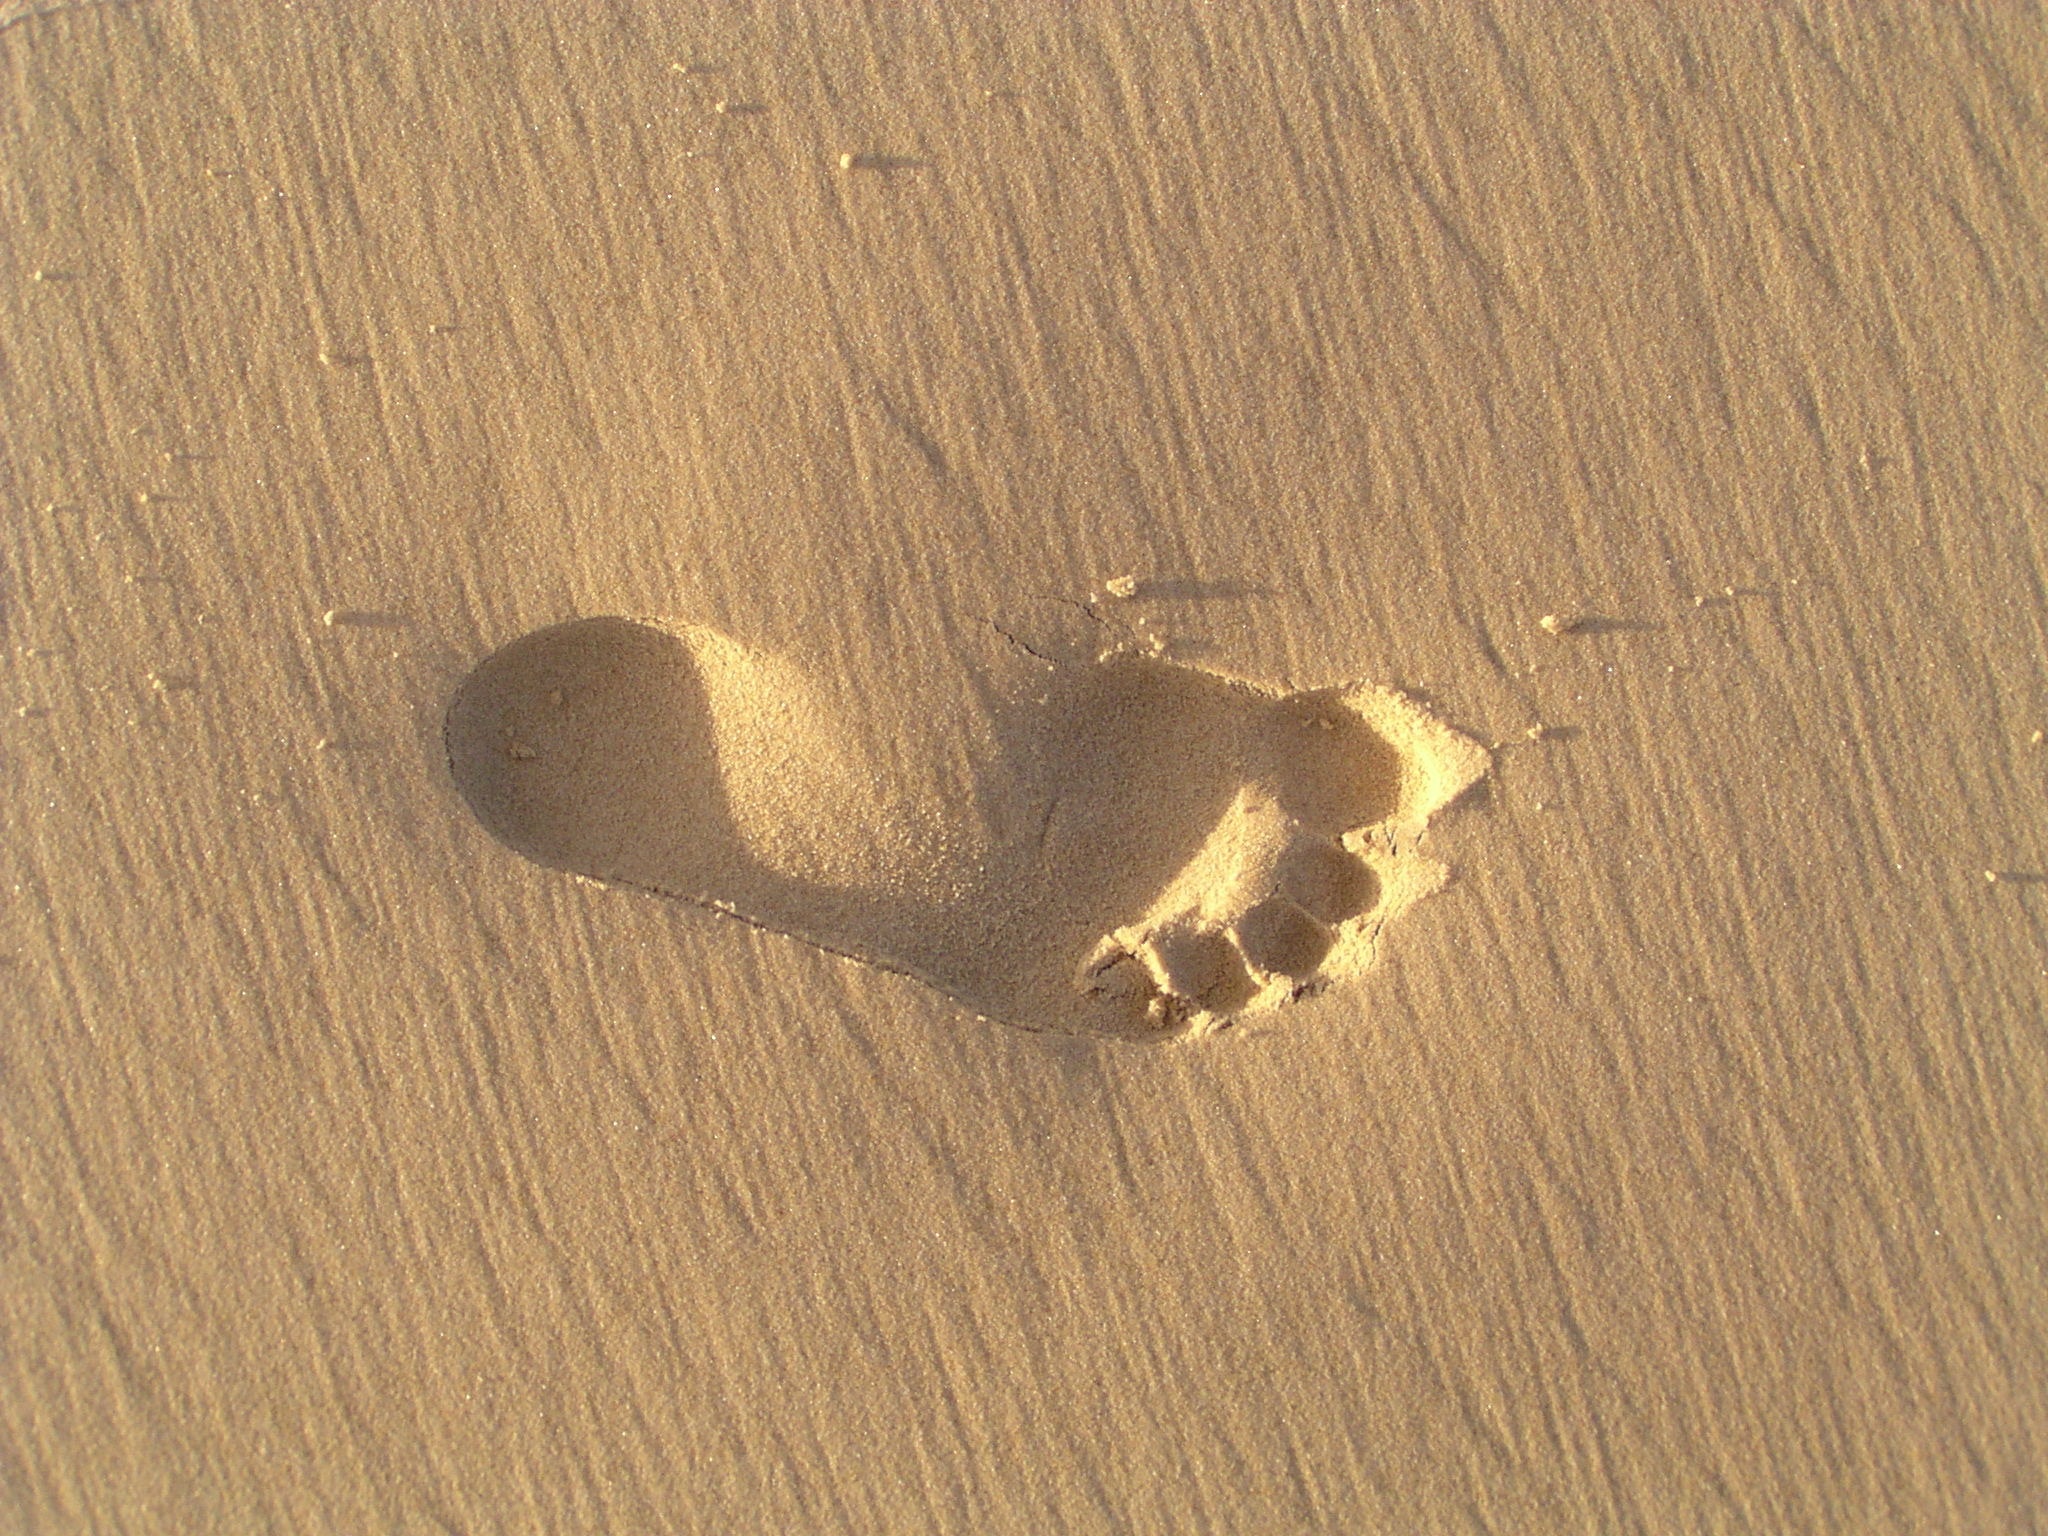 gray sand foot print